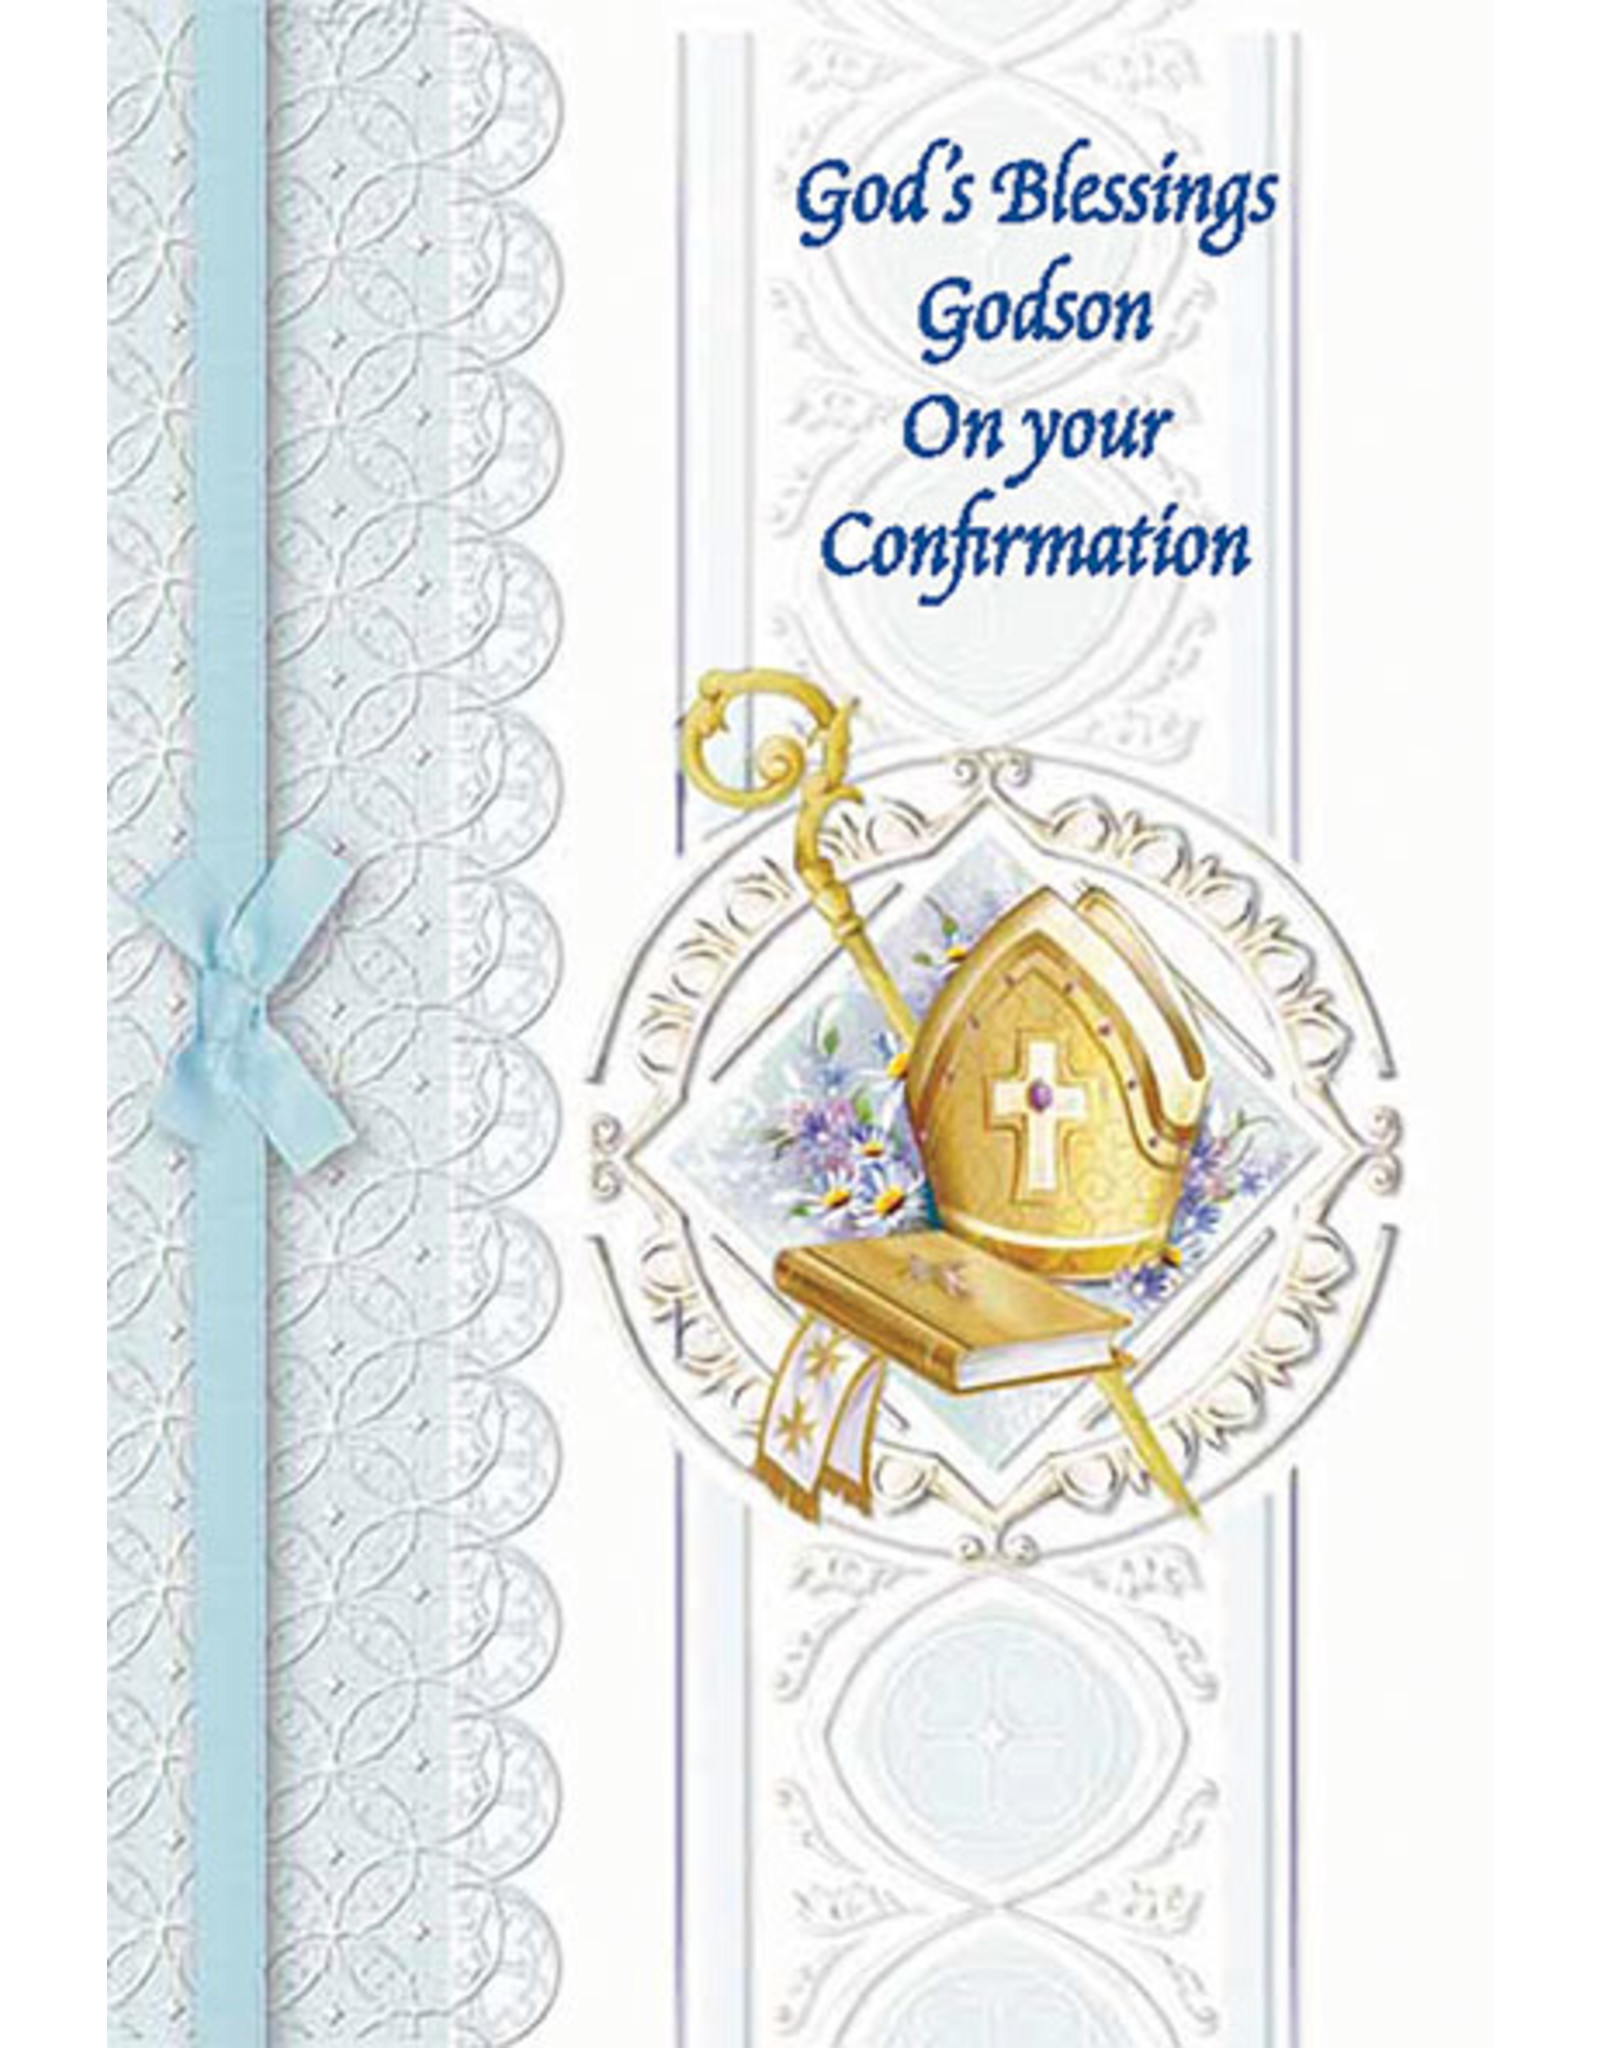 Card - Confirmation, Godson, God's Blessings